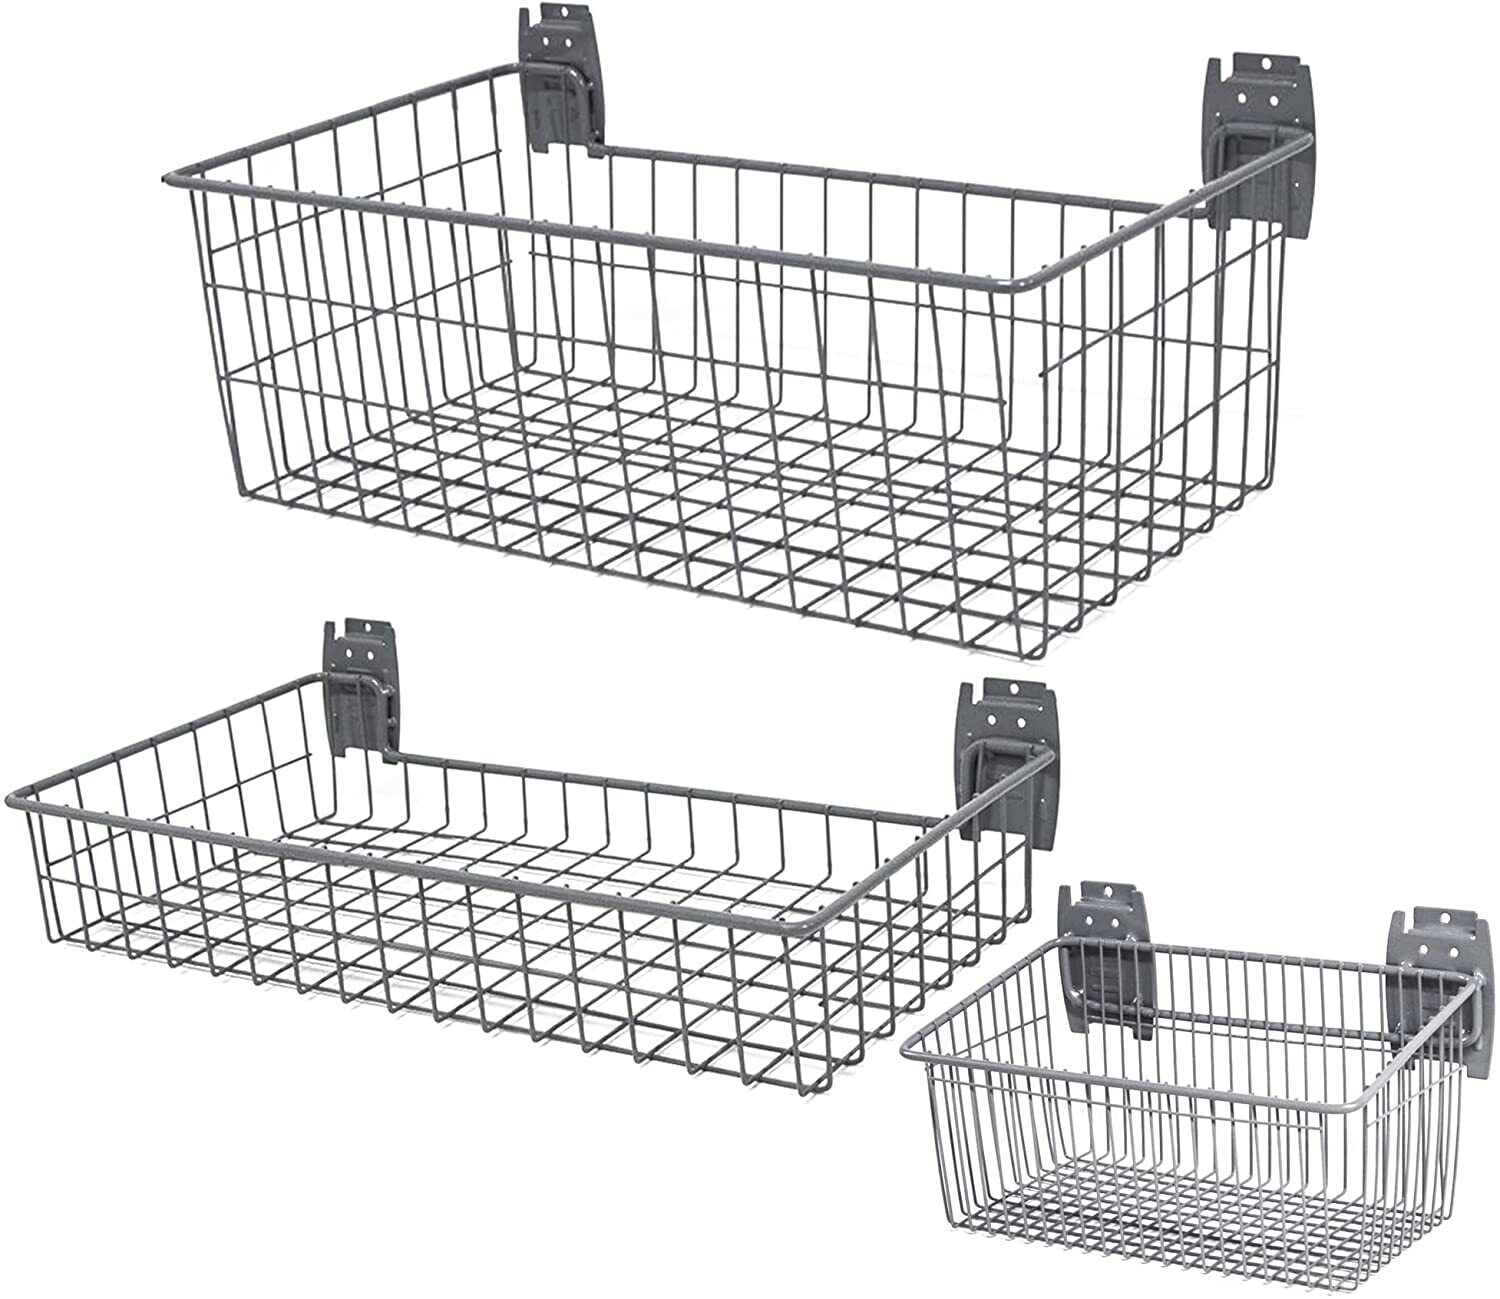  3Pcs Slatwall Baskets Set Pegboard Metal Storage Basket for Organizing Tools